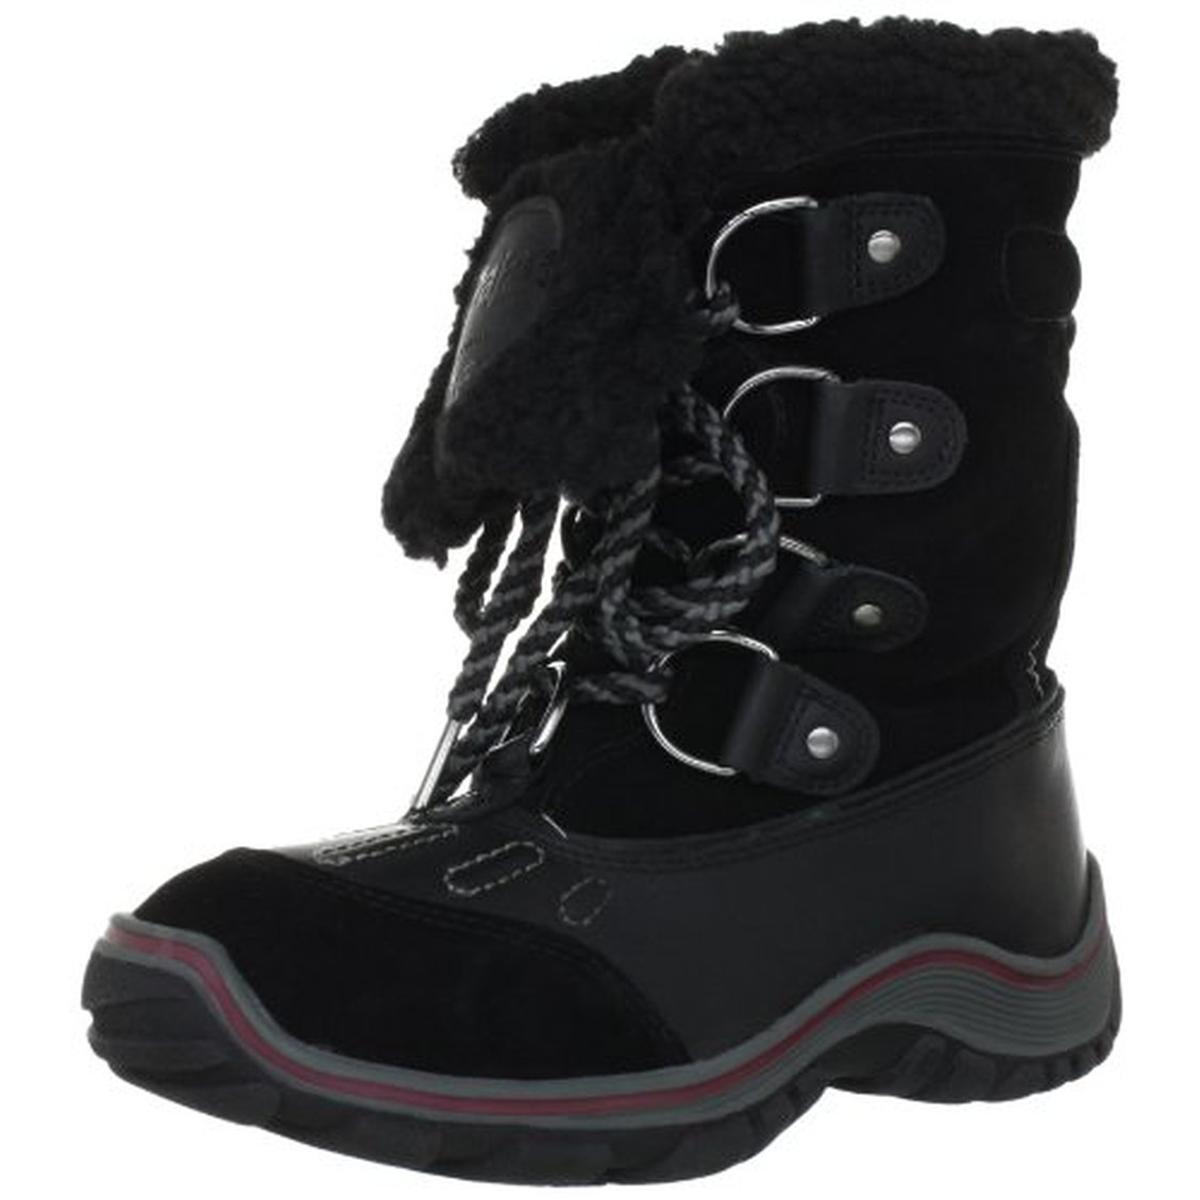 Pajar 6665 Womens Alina Leather Waterproof Faux Fur Snow Boots Shoes BHFO | eBay